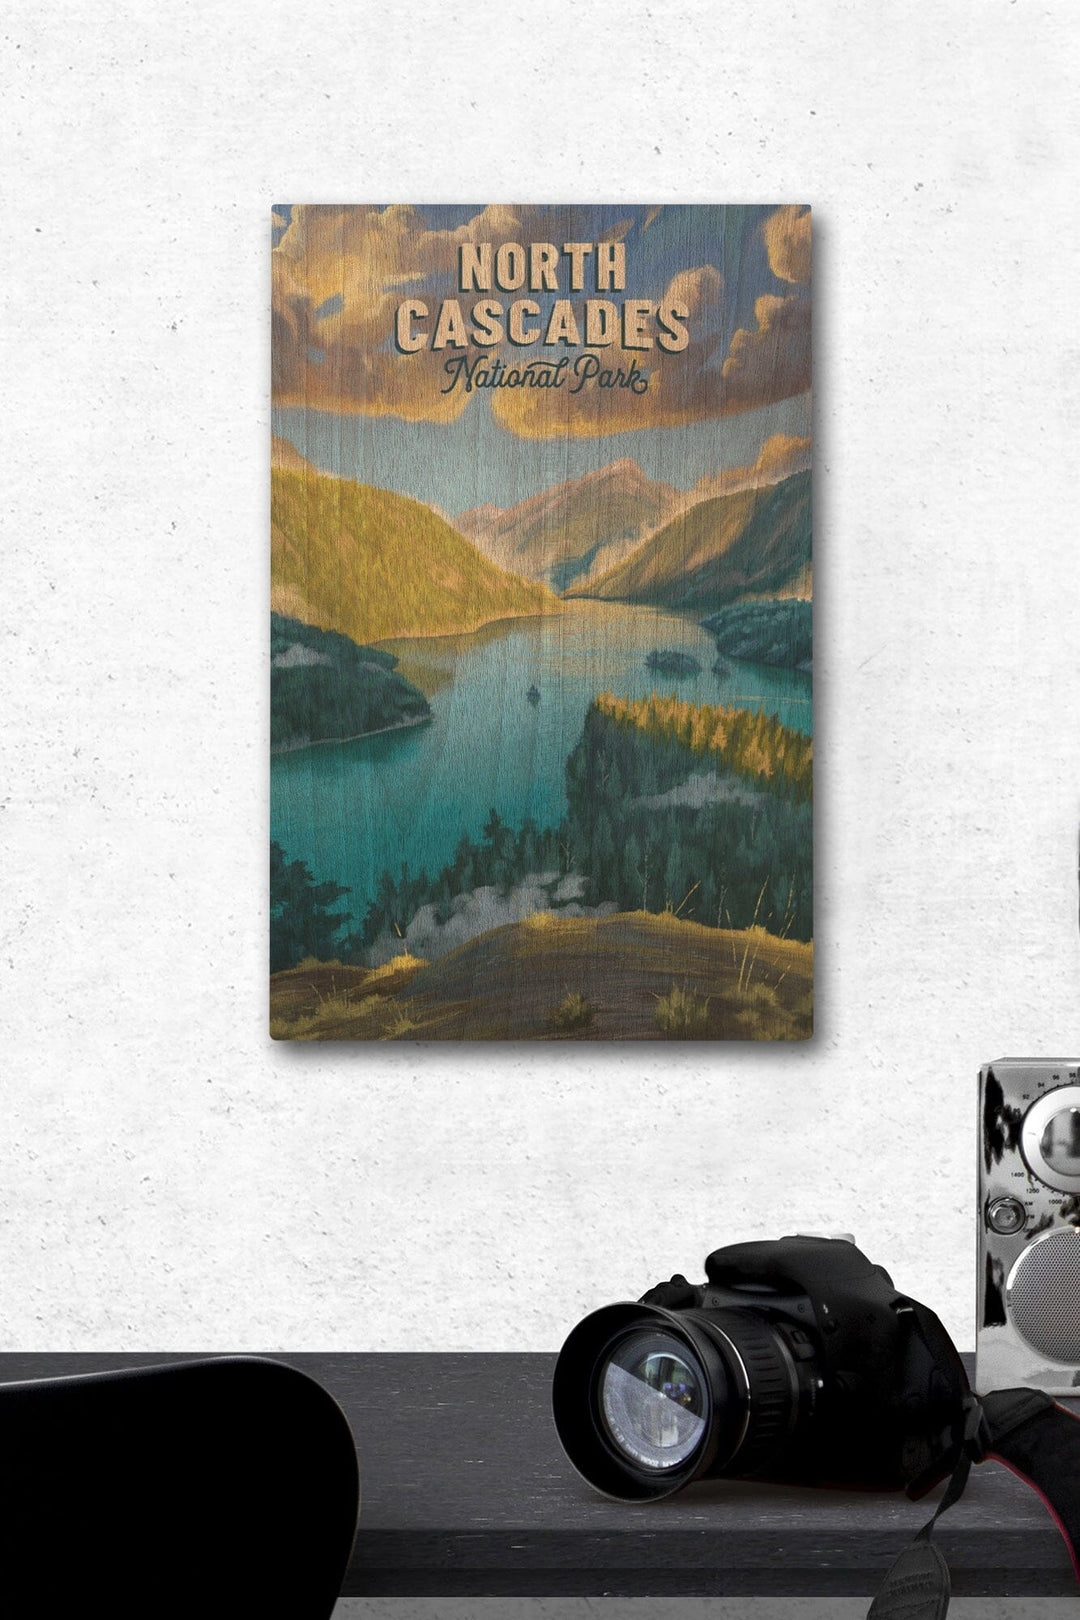 North Cascades National Park, Washington, Oil Painting National Park Series, Lantern Press Artwork, Wood Signs and Postcards Wood Lantern Press 12 x 18 Wood Gallery Print 